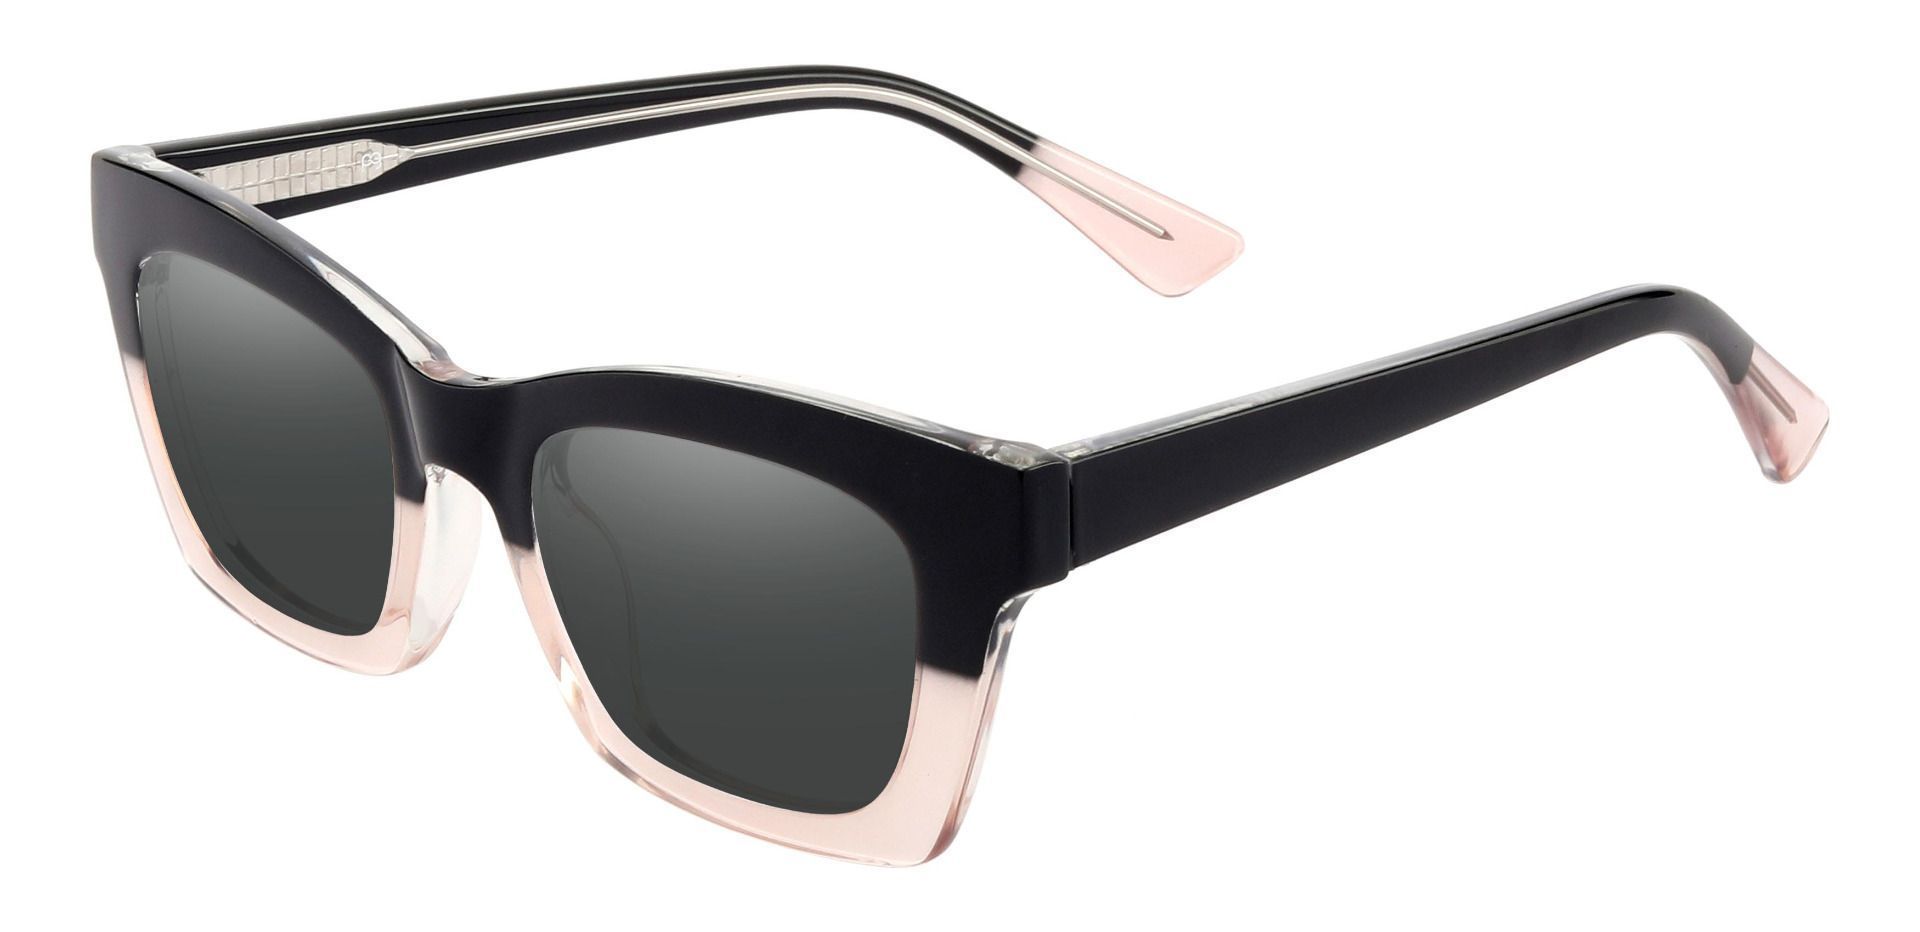 McKee Rectangle Prescription Sunglasses - Black Frame With Gray Lenses